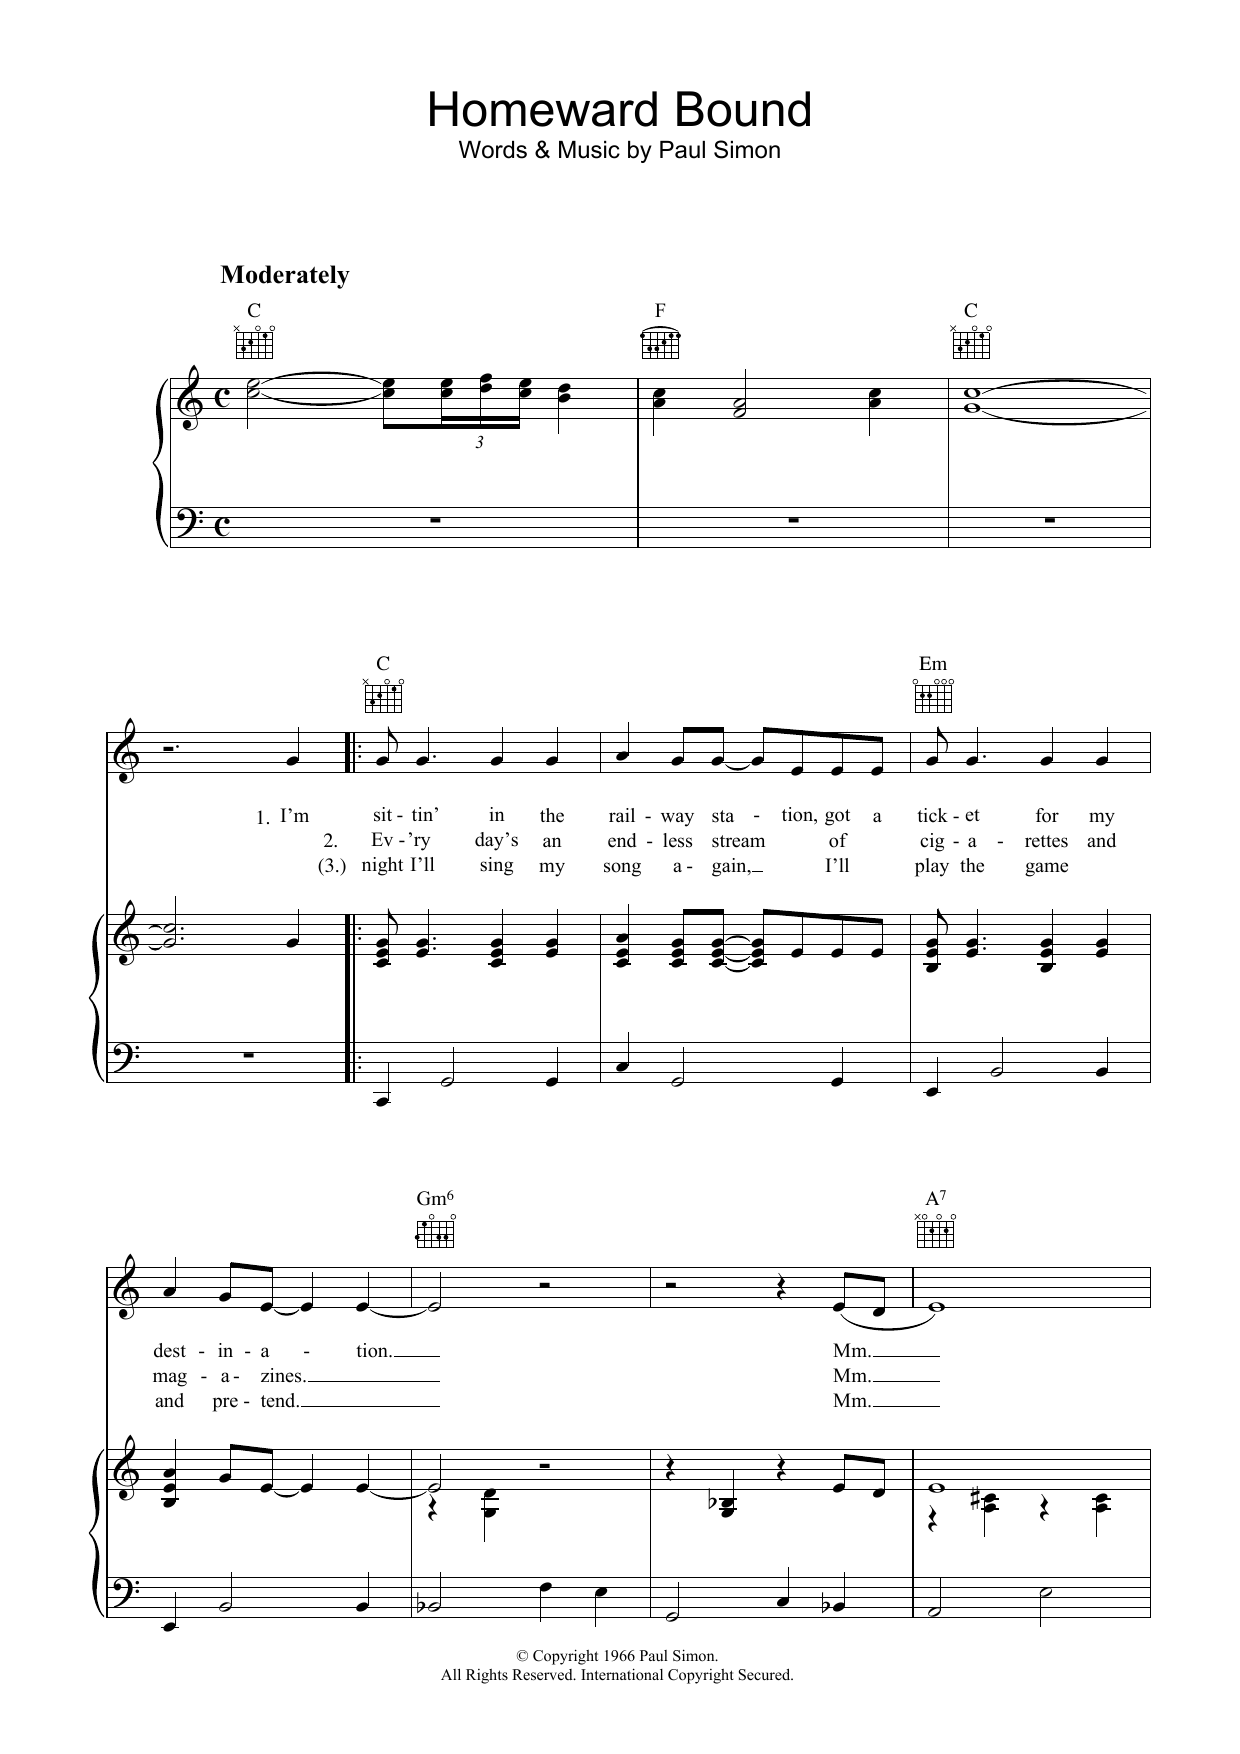 Simon & Garfunkel Homeward Bound sheet music notes and chords arranged for Piano, Vocal & Guitar Chords